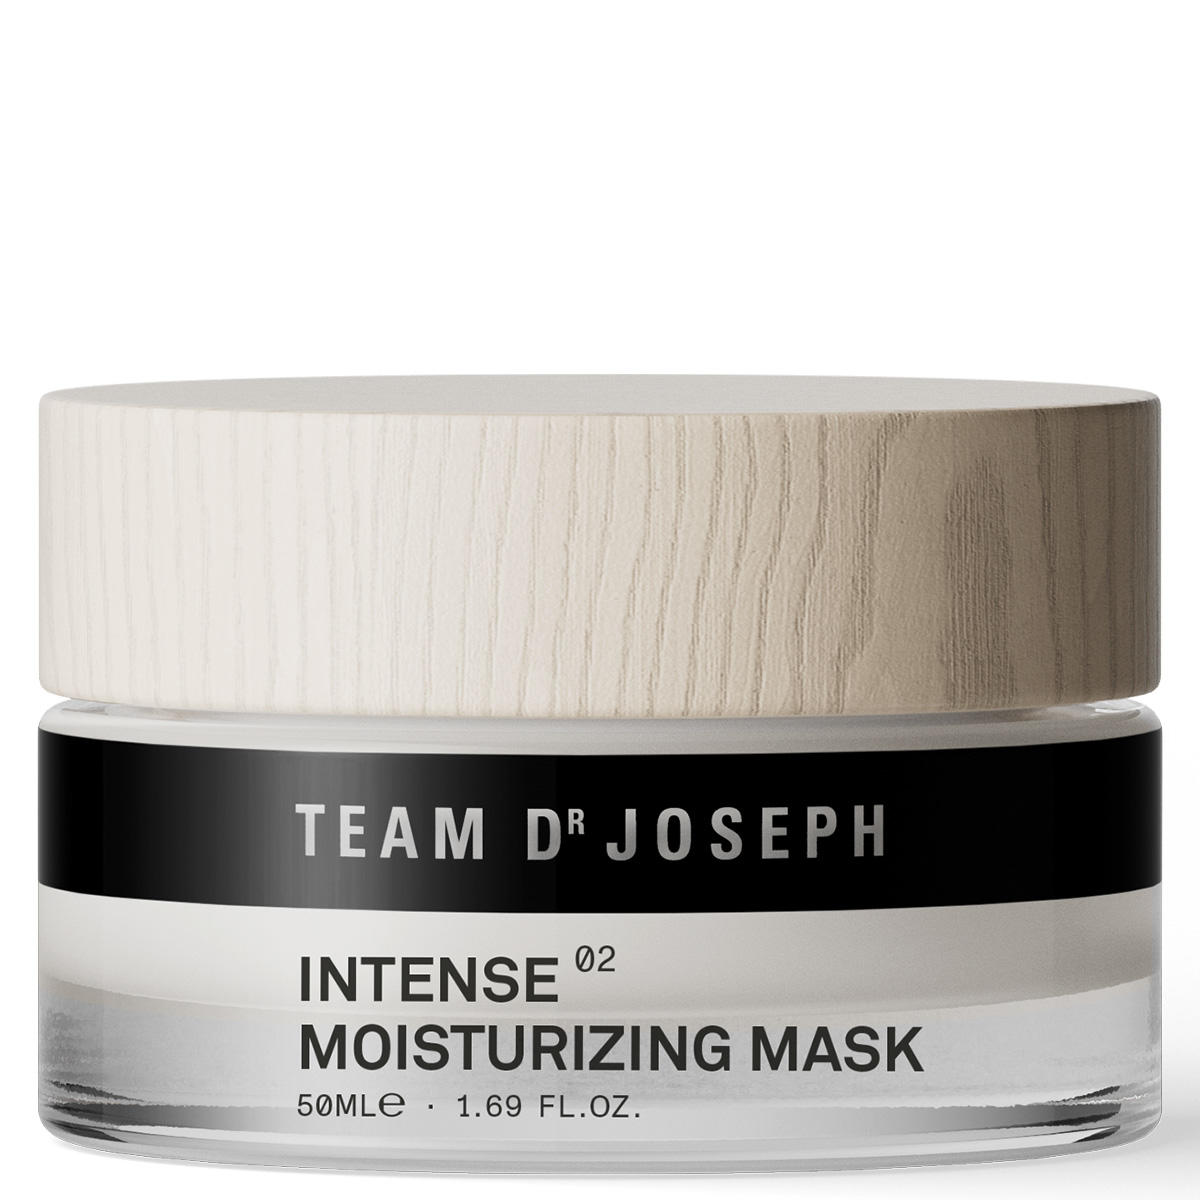 TEAM DR JOSEPH Intense Moisturizing Mask 50 ml - 1